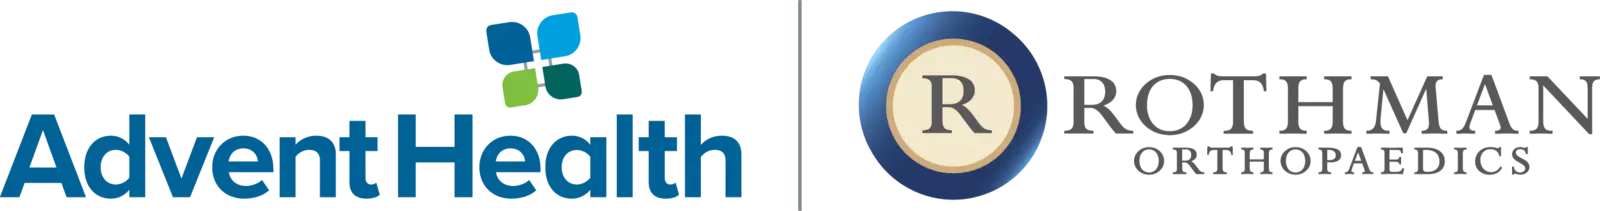 AdventHealth and Rothman Orthopaedics Logos